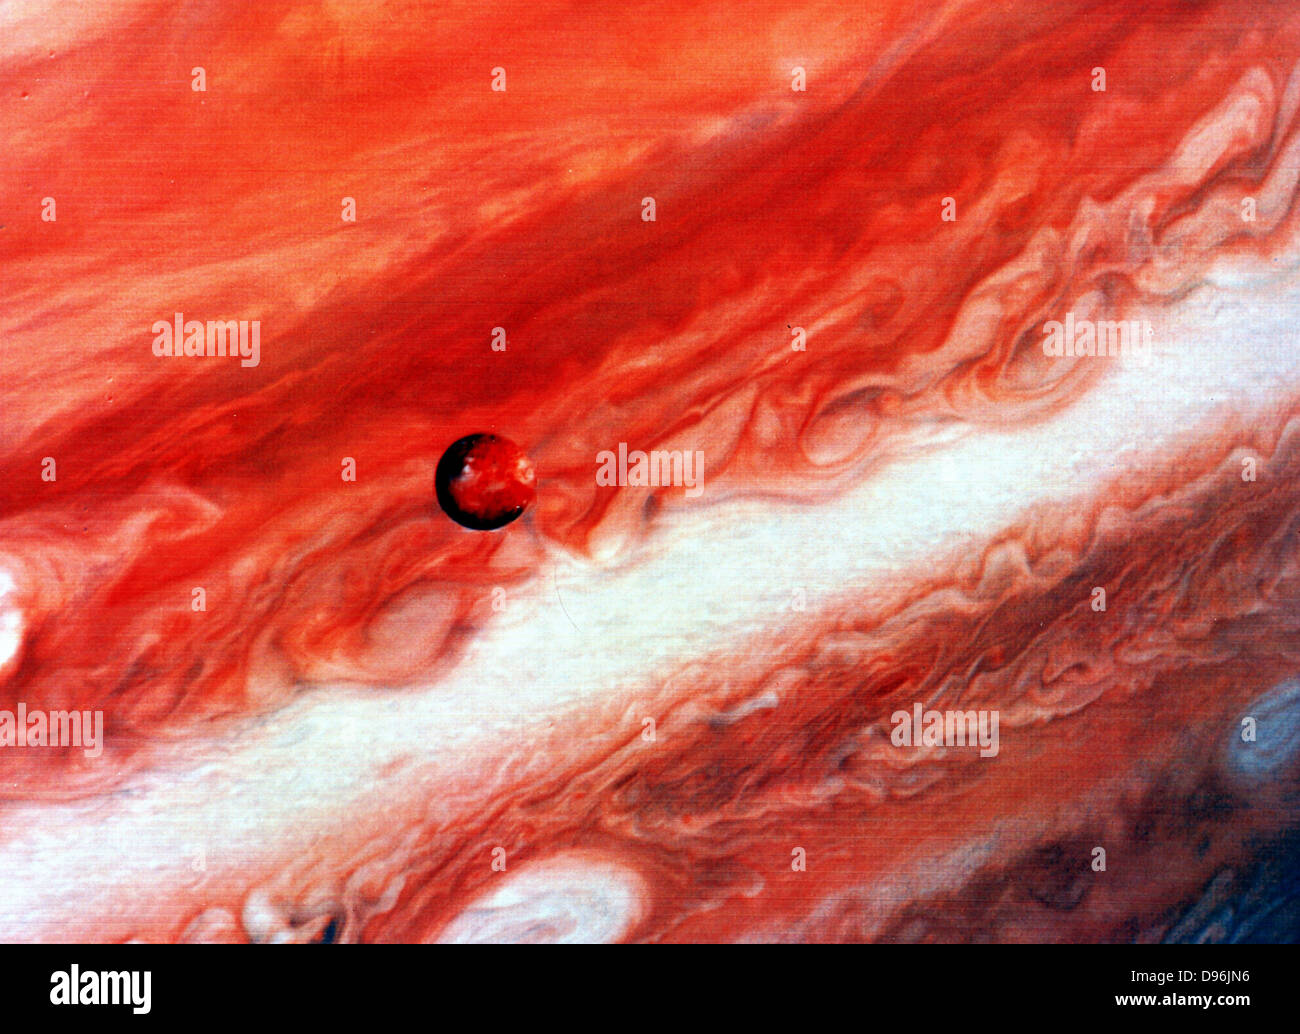 Mosaic of Jupiter and its inner satelite lo. NASA photograph. Stock Photo